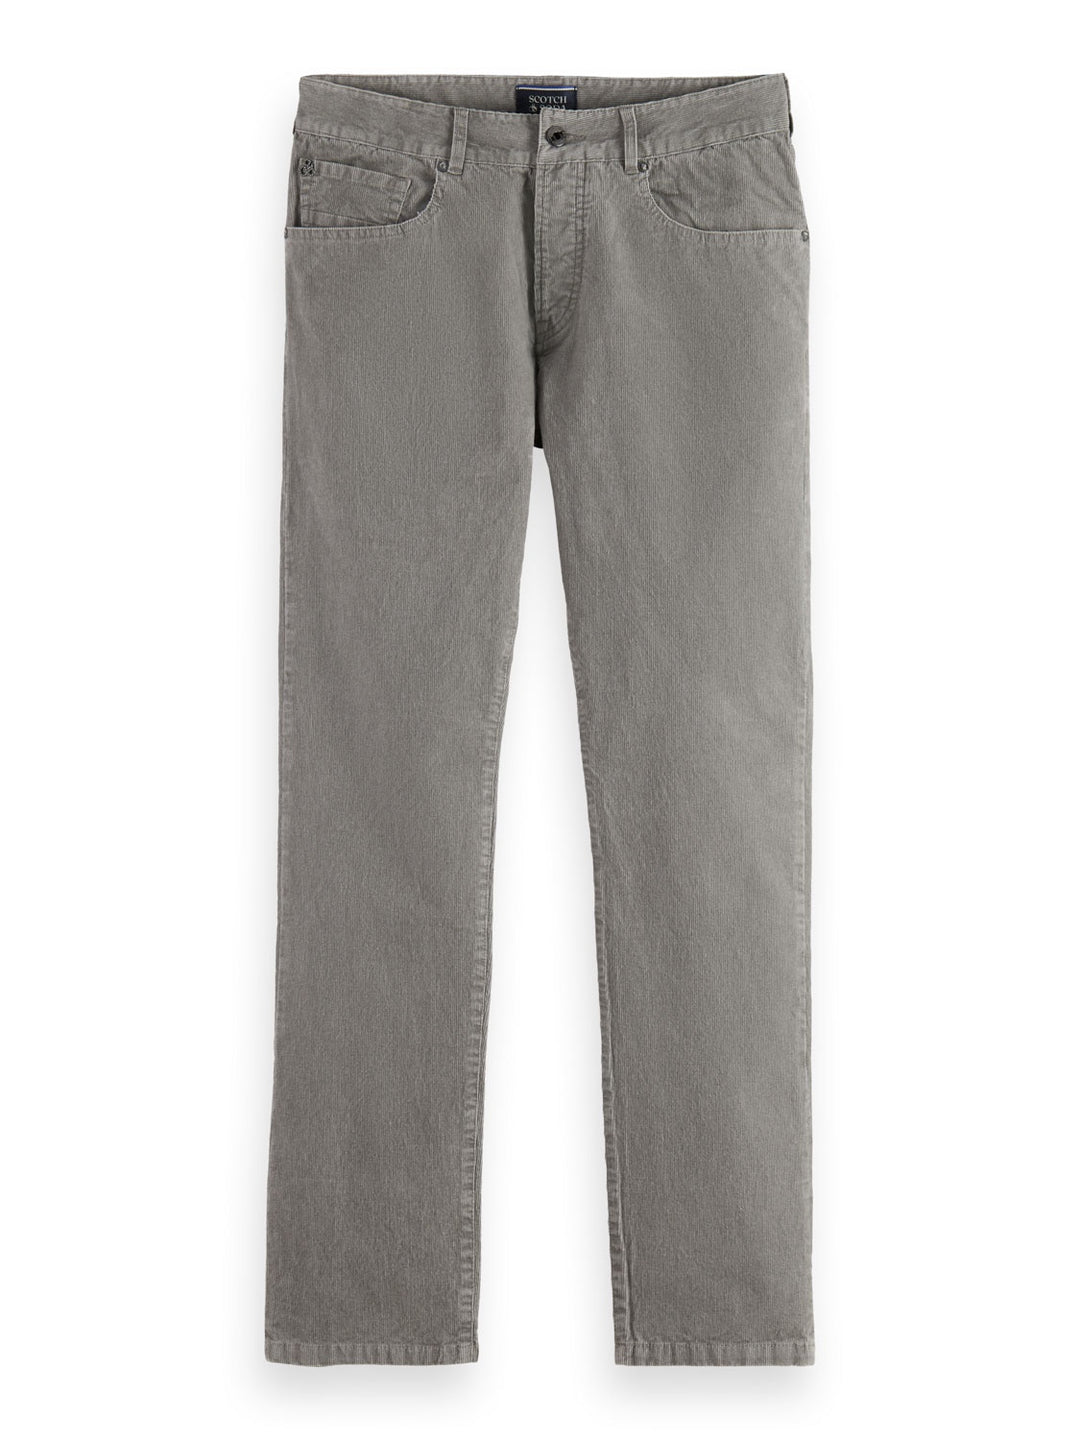 Ralston Regular Slim Fit Corduroy Pants in Seal Grey | Buster McGee